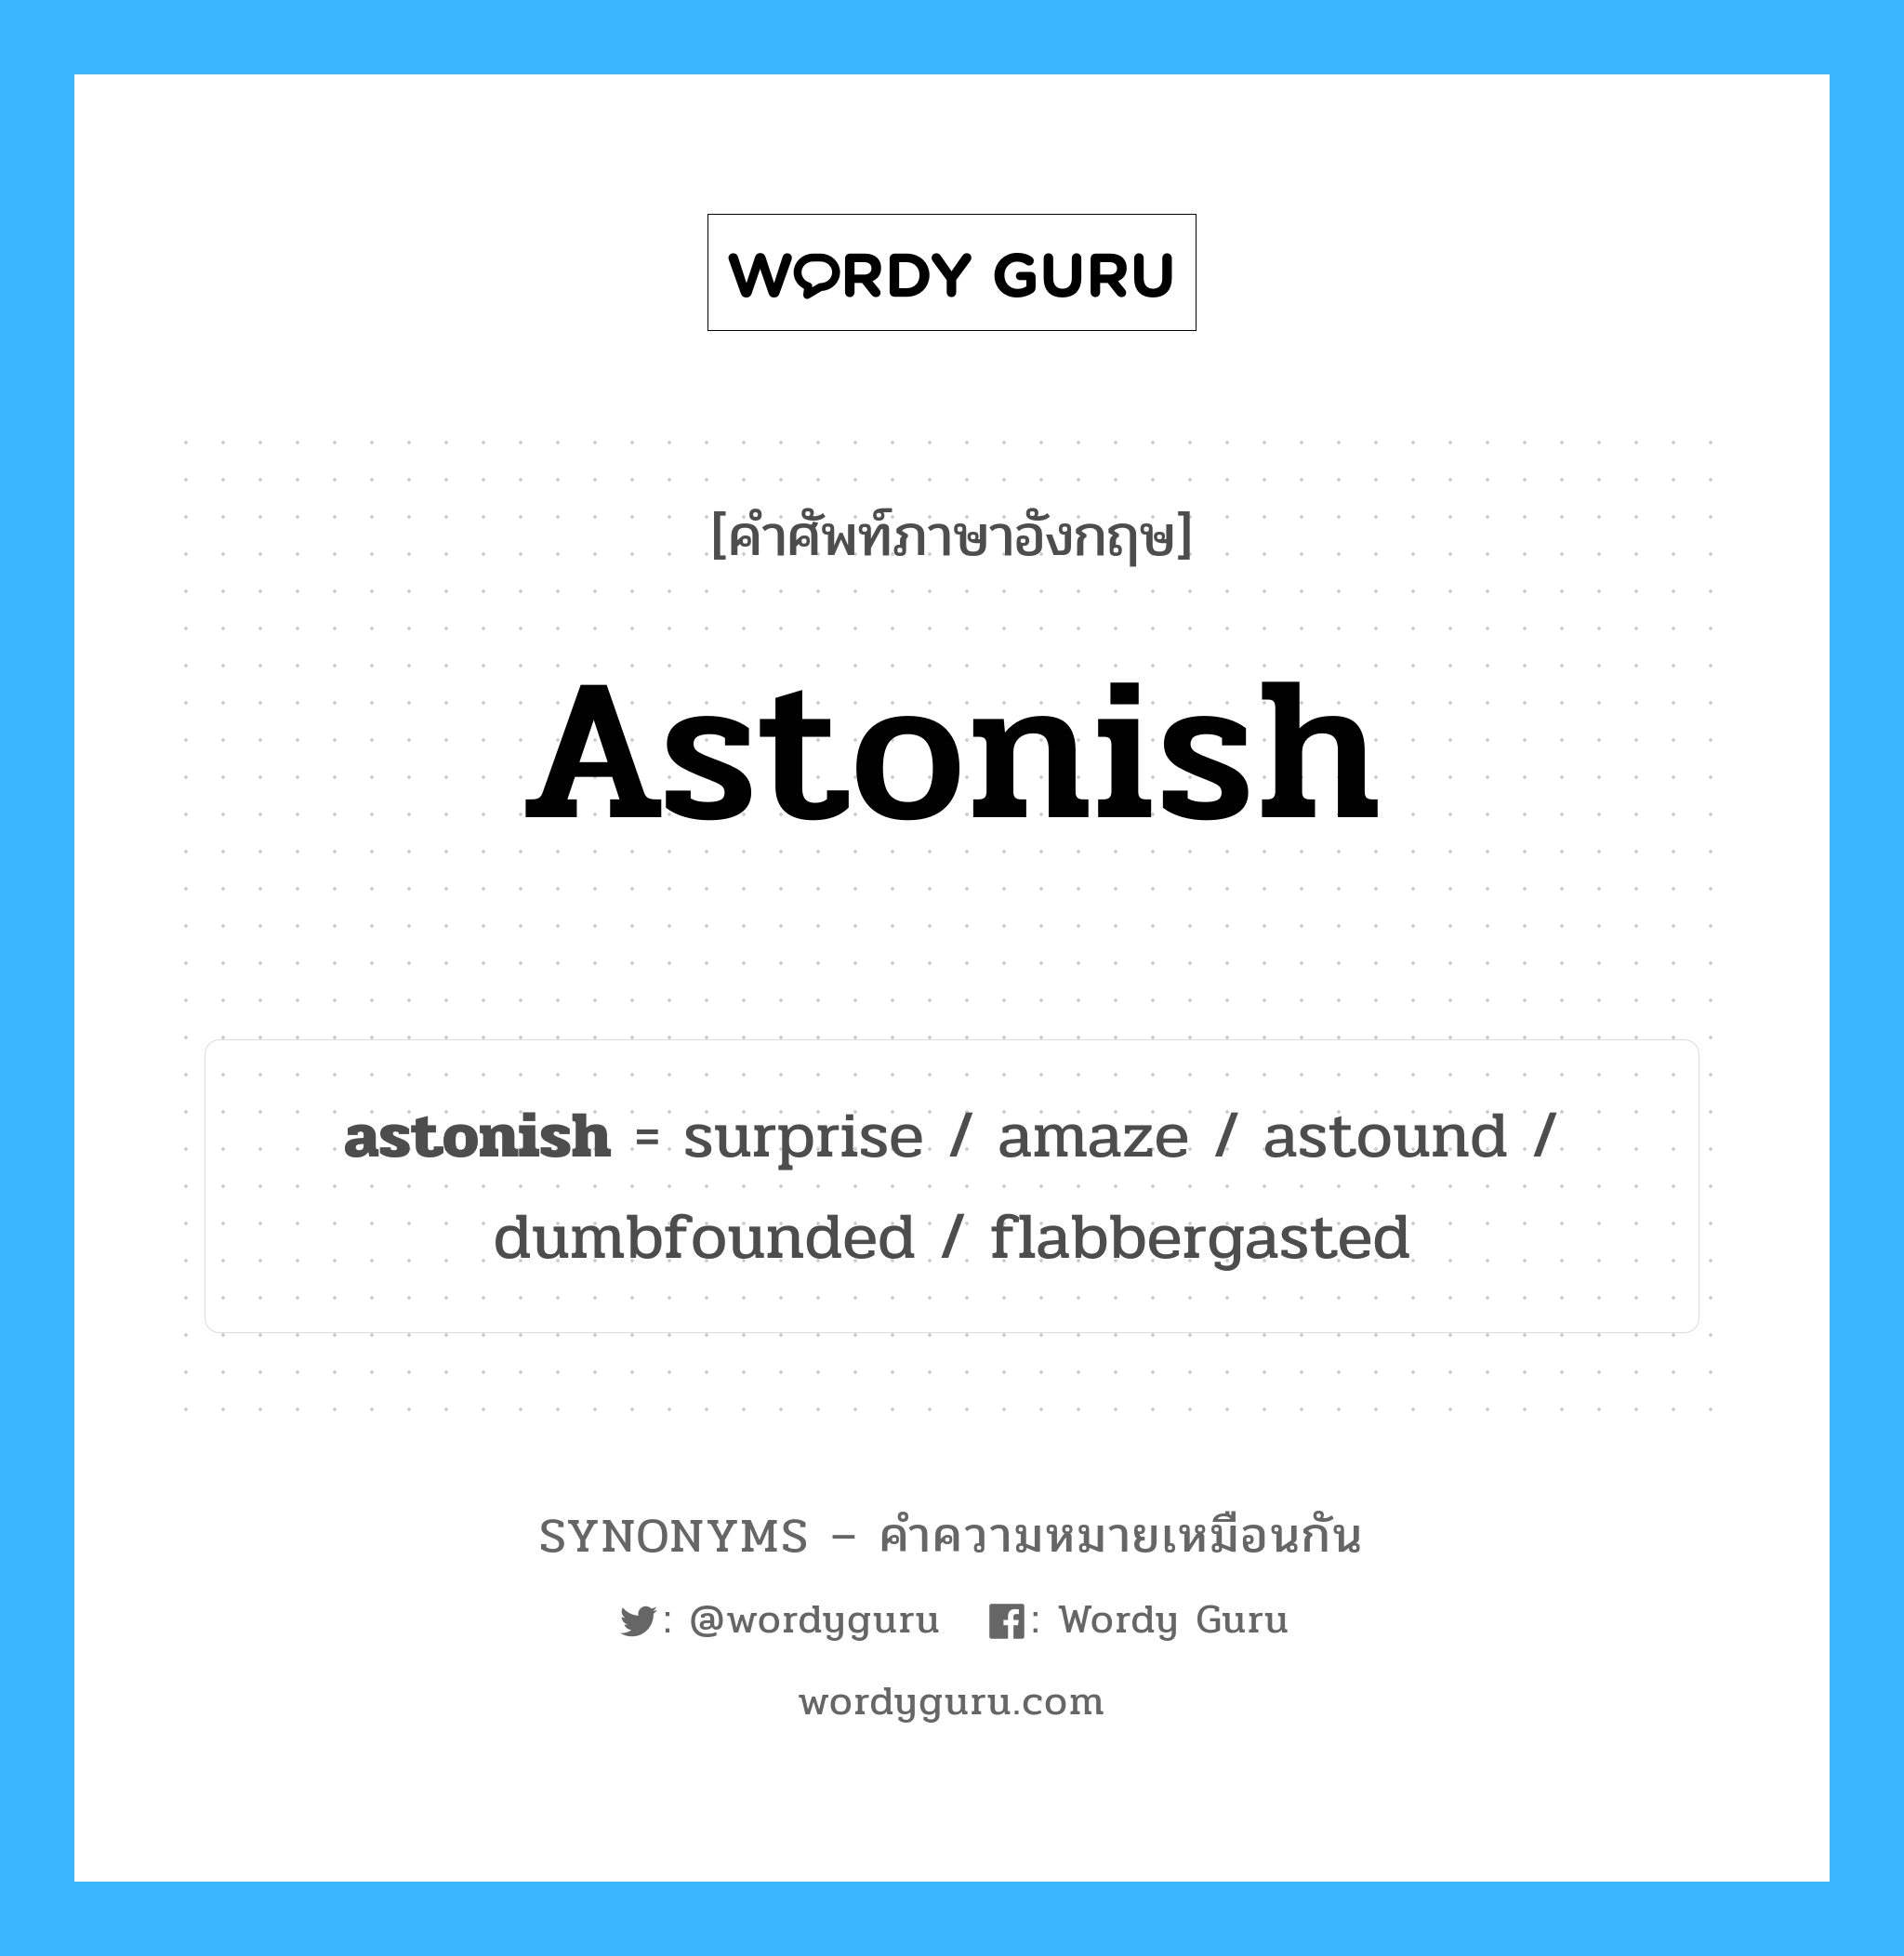 astonish เป็นหนึ่งใน surprise และมีคำอื่น ๆ อีกดังนี้, คำศัพท์ภาษาอังกฤษ astonish ความหมายคล้ายกันกับ surprise แปลว่า แปลกใจ หมวด surprise